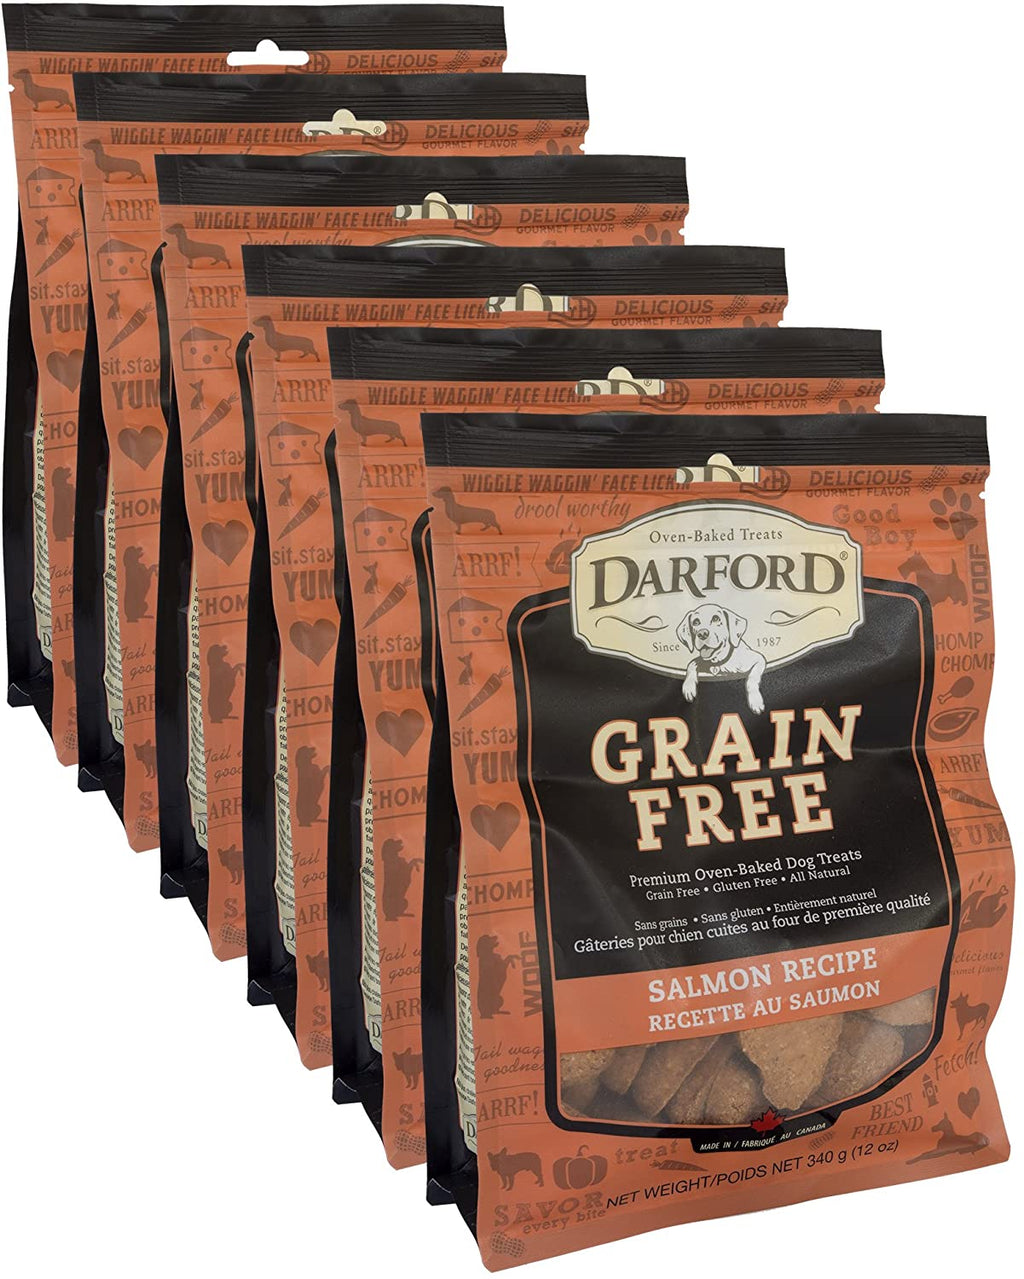 Darford Grain Free Salmon Recipe Dog Biscuit Treats - 12 oz - Case of 6  